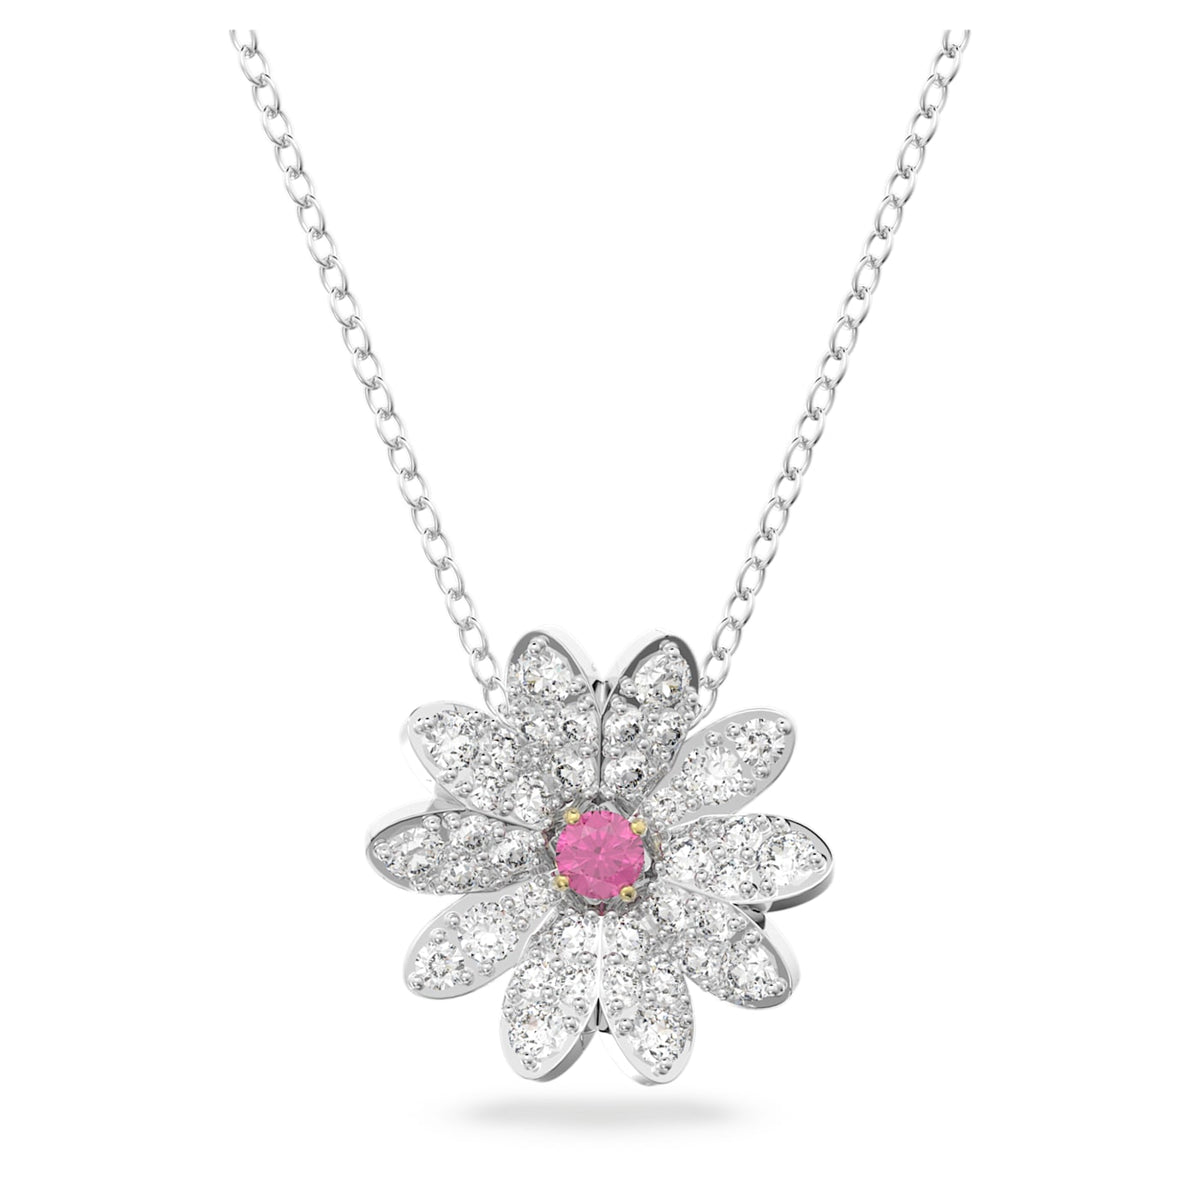 Swarovski Rose Gold-Tone Crystal Flower Pendant Necklace, 14-7/8